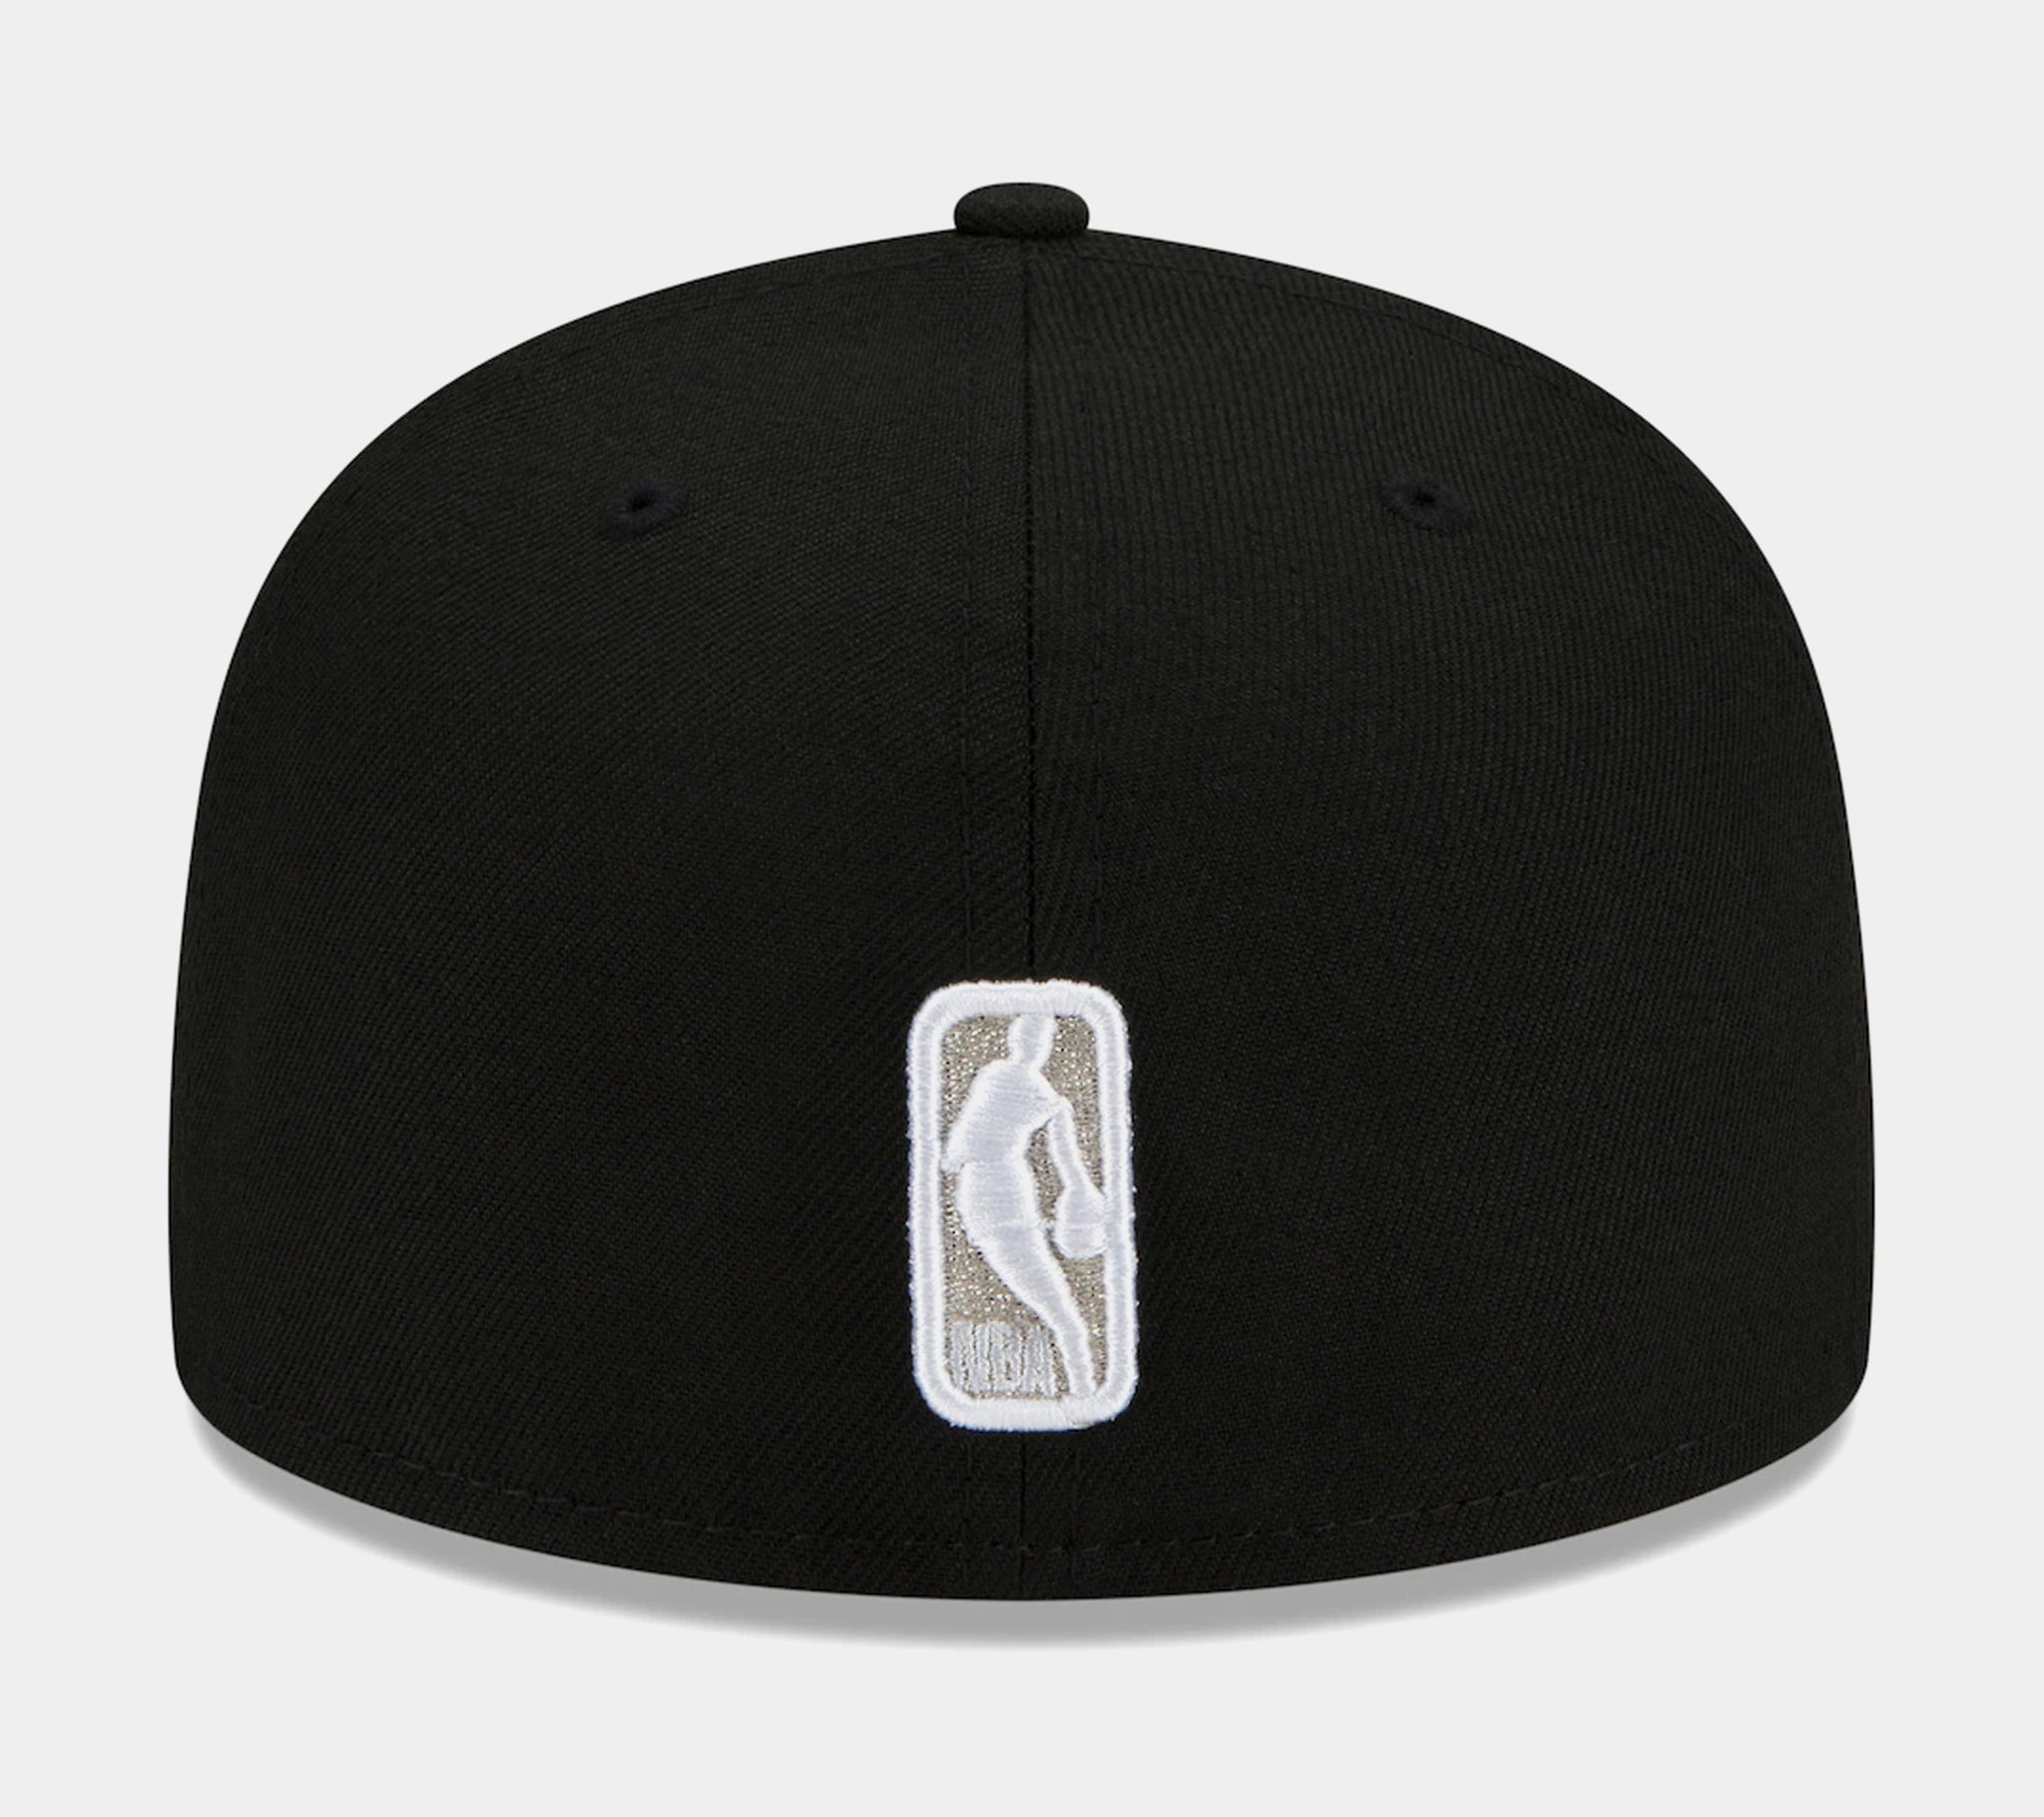 New Era Men's San Antonio Spurs 59Fifty Black/Grey Fitted Hat